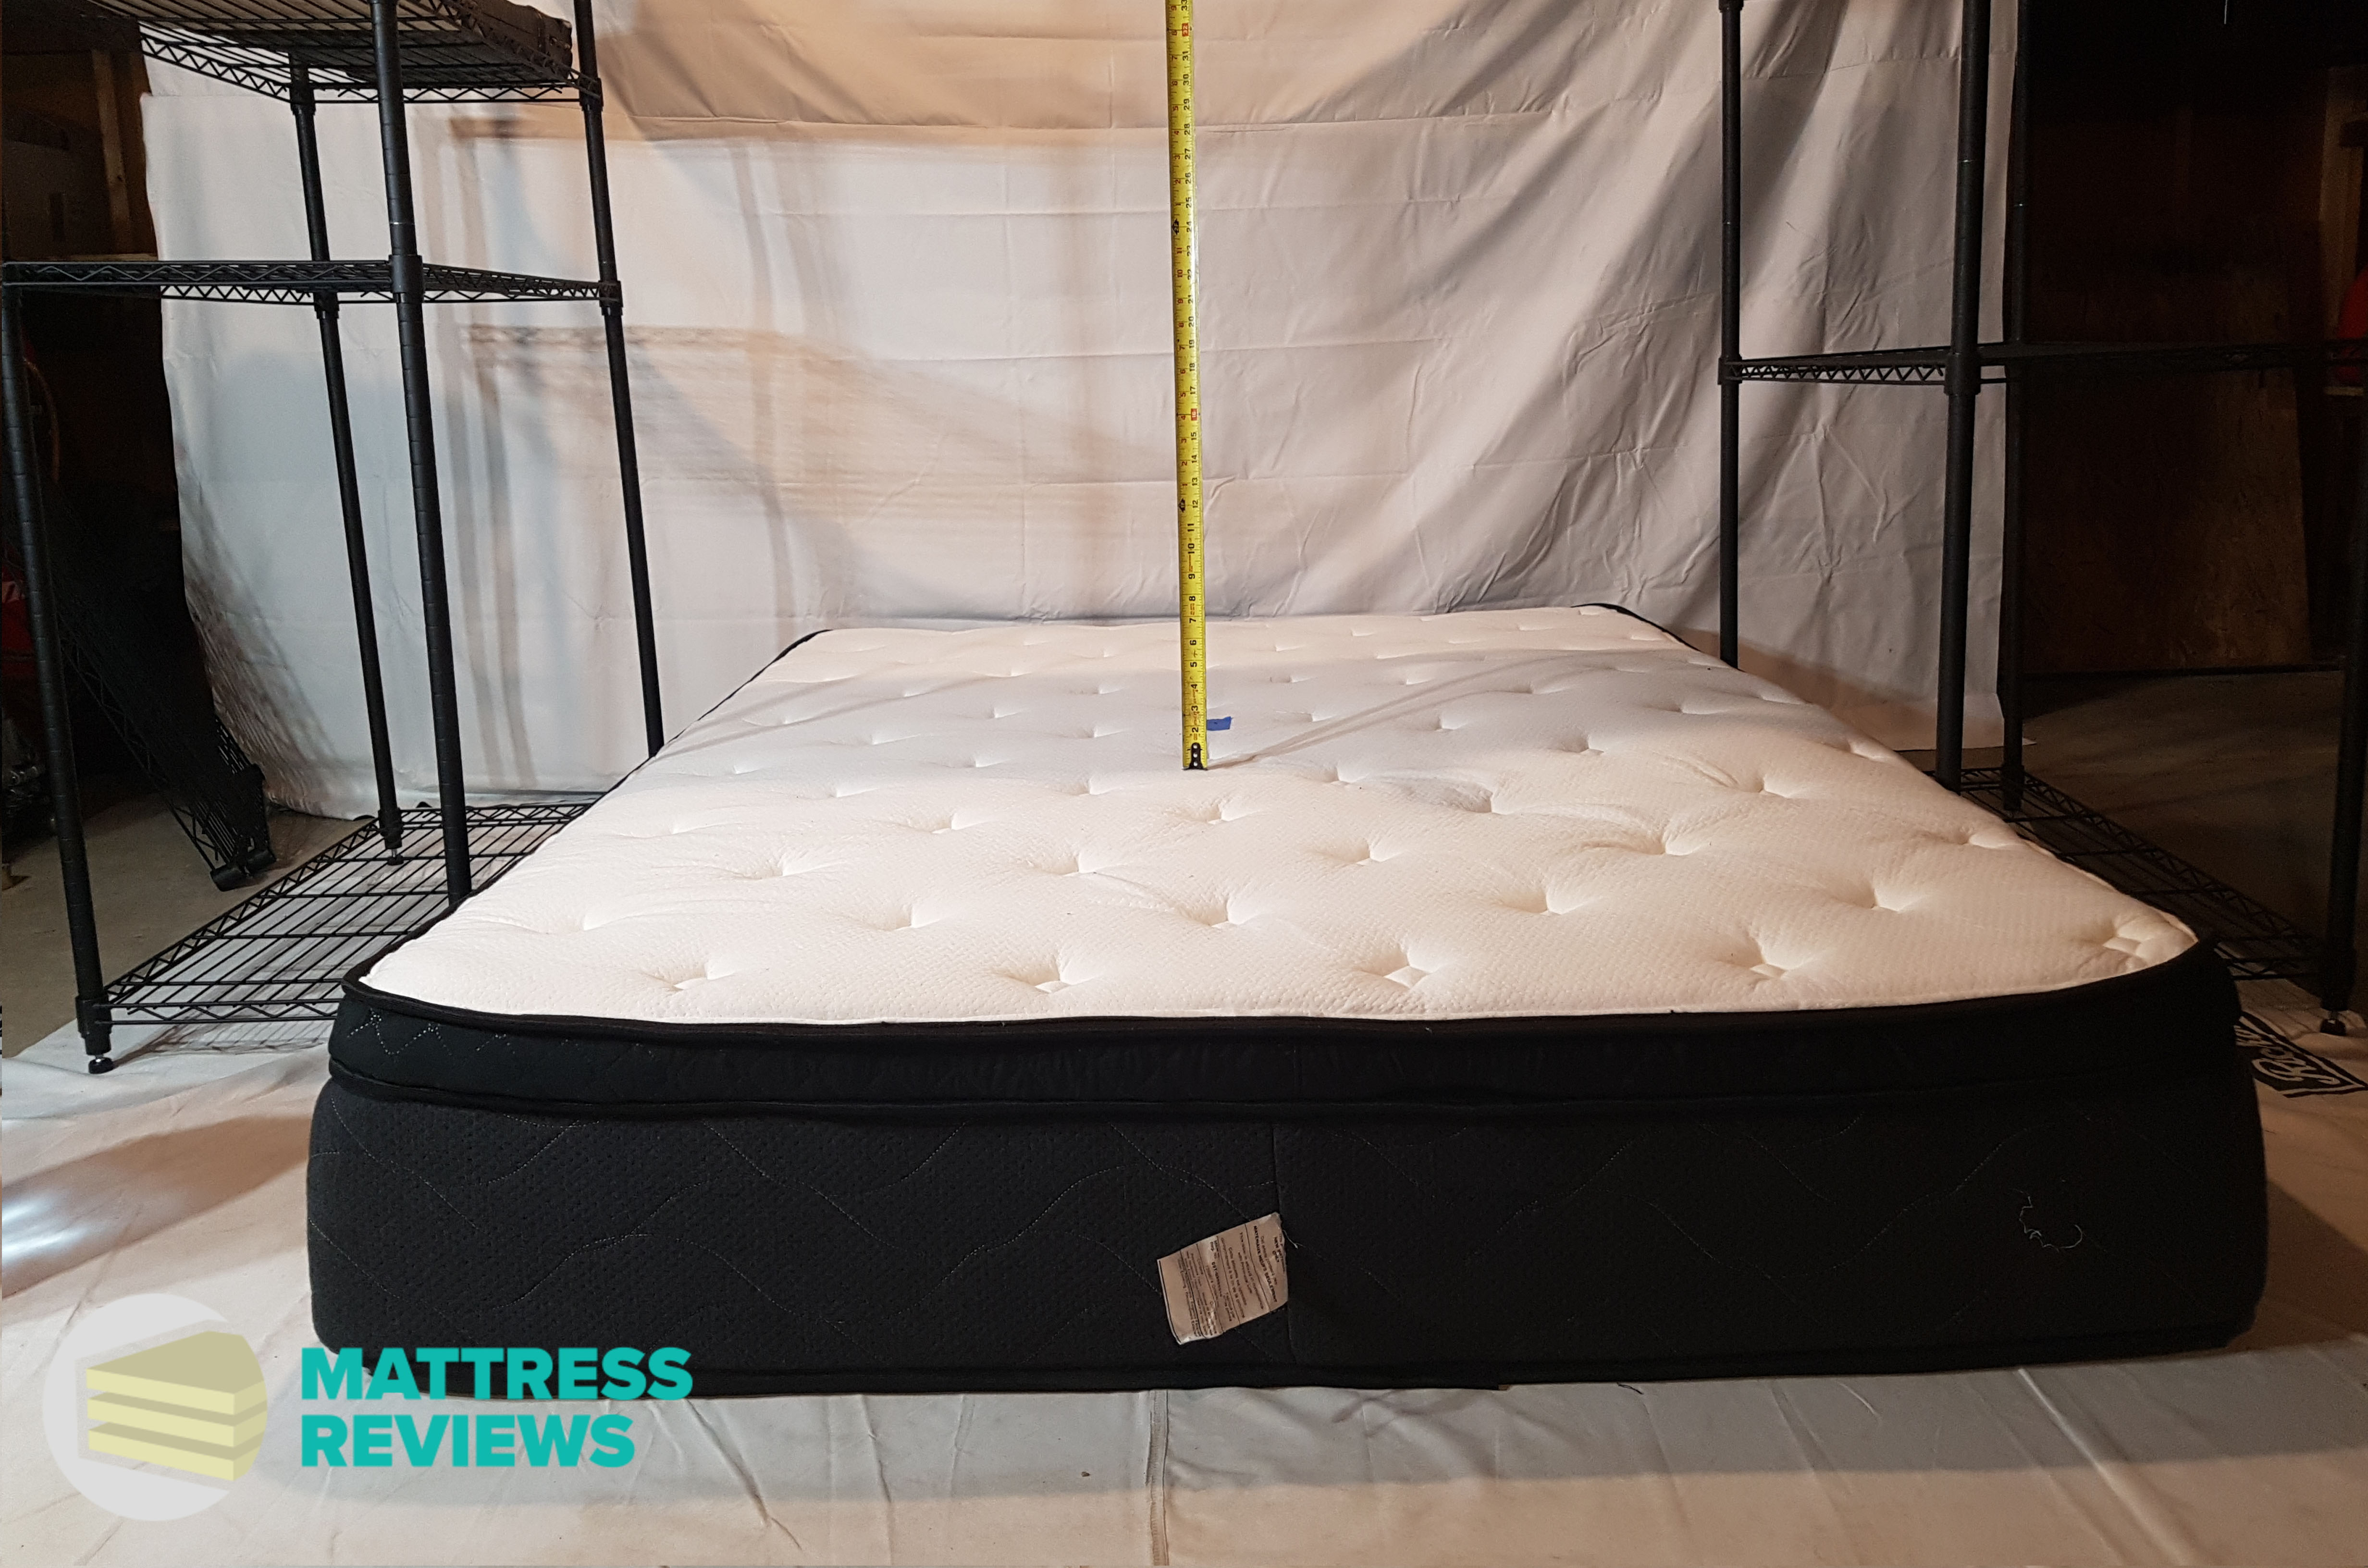 Image of the Hamuq mattress bounce test.